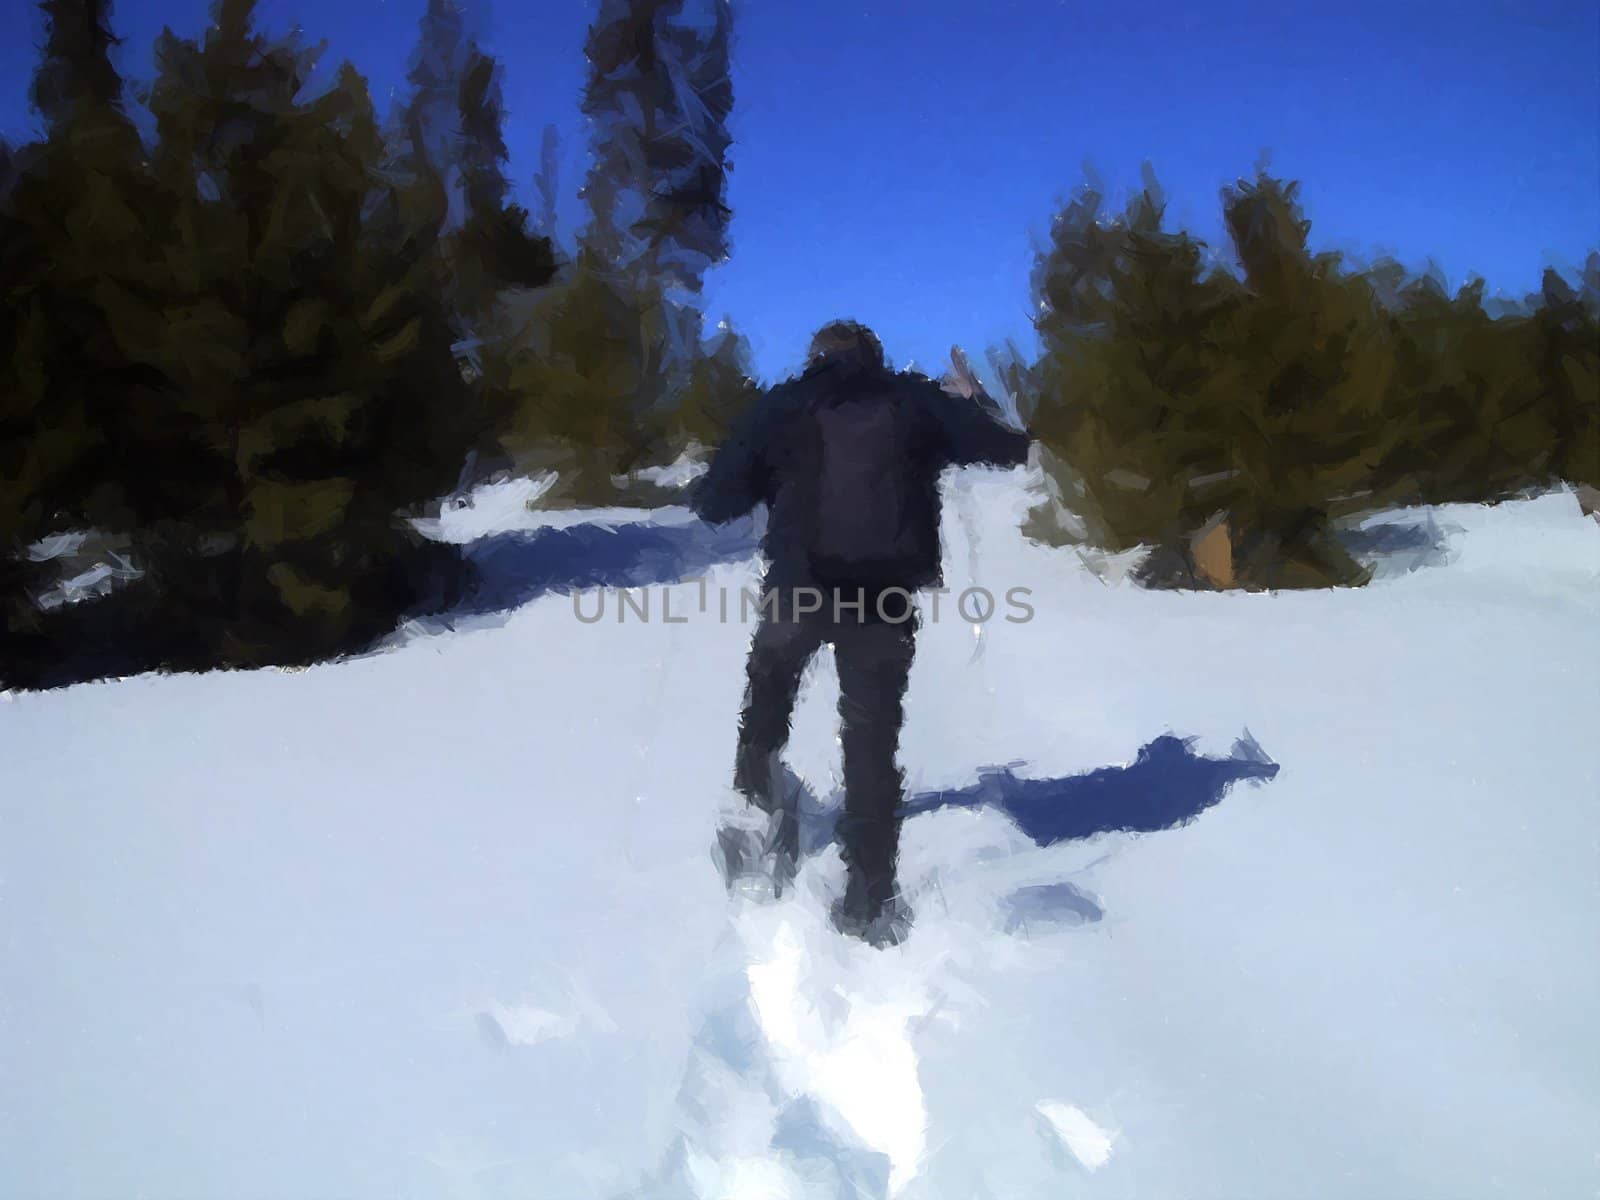 A man trudging through the soft white snow.